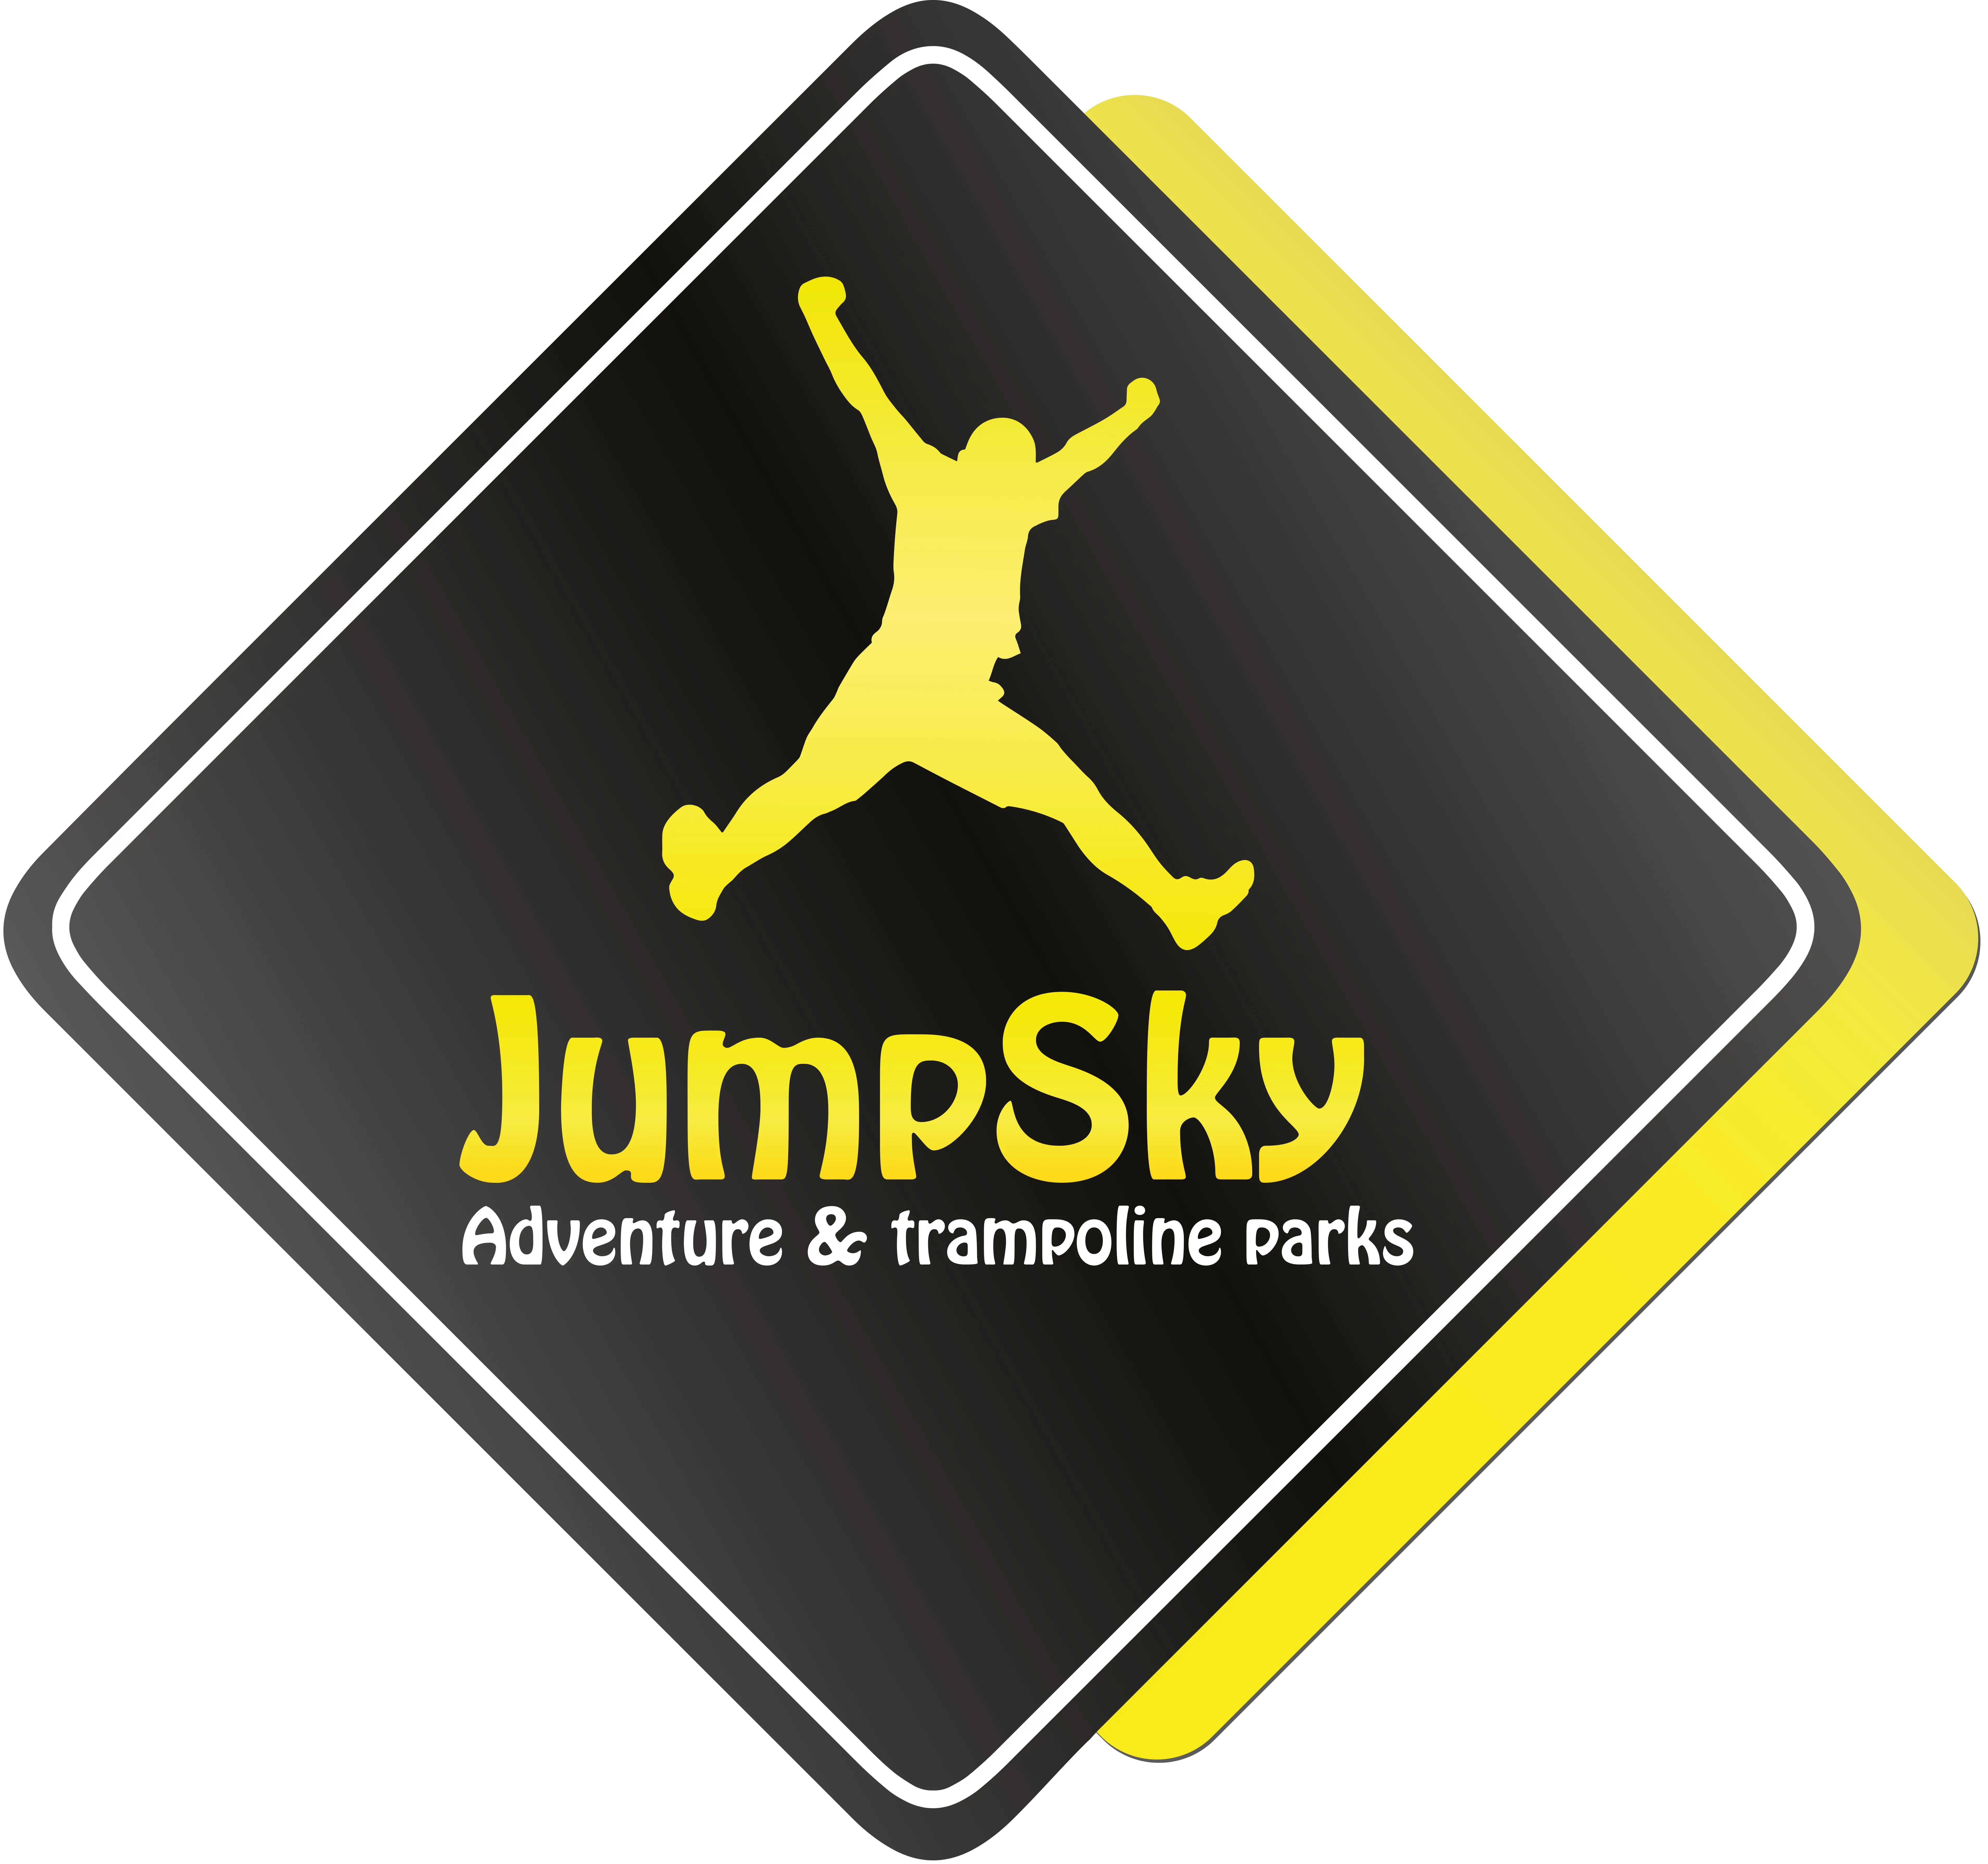 Jumpsky